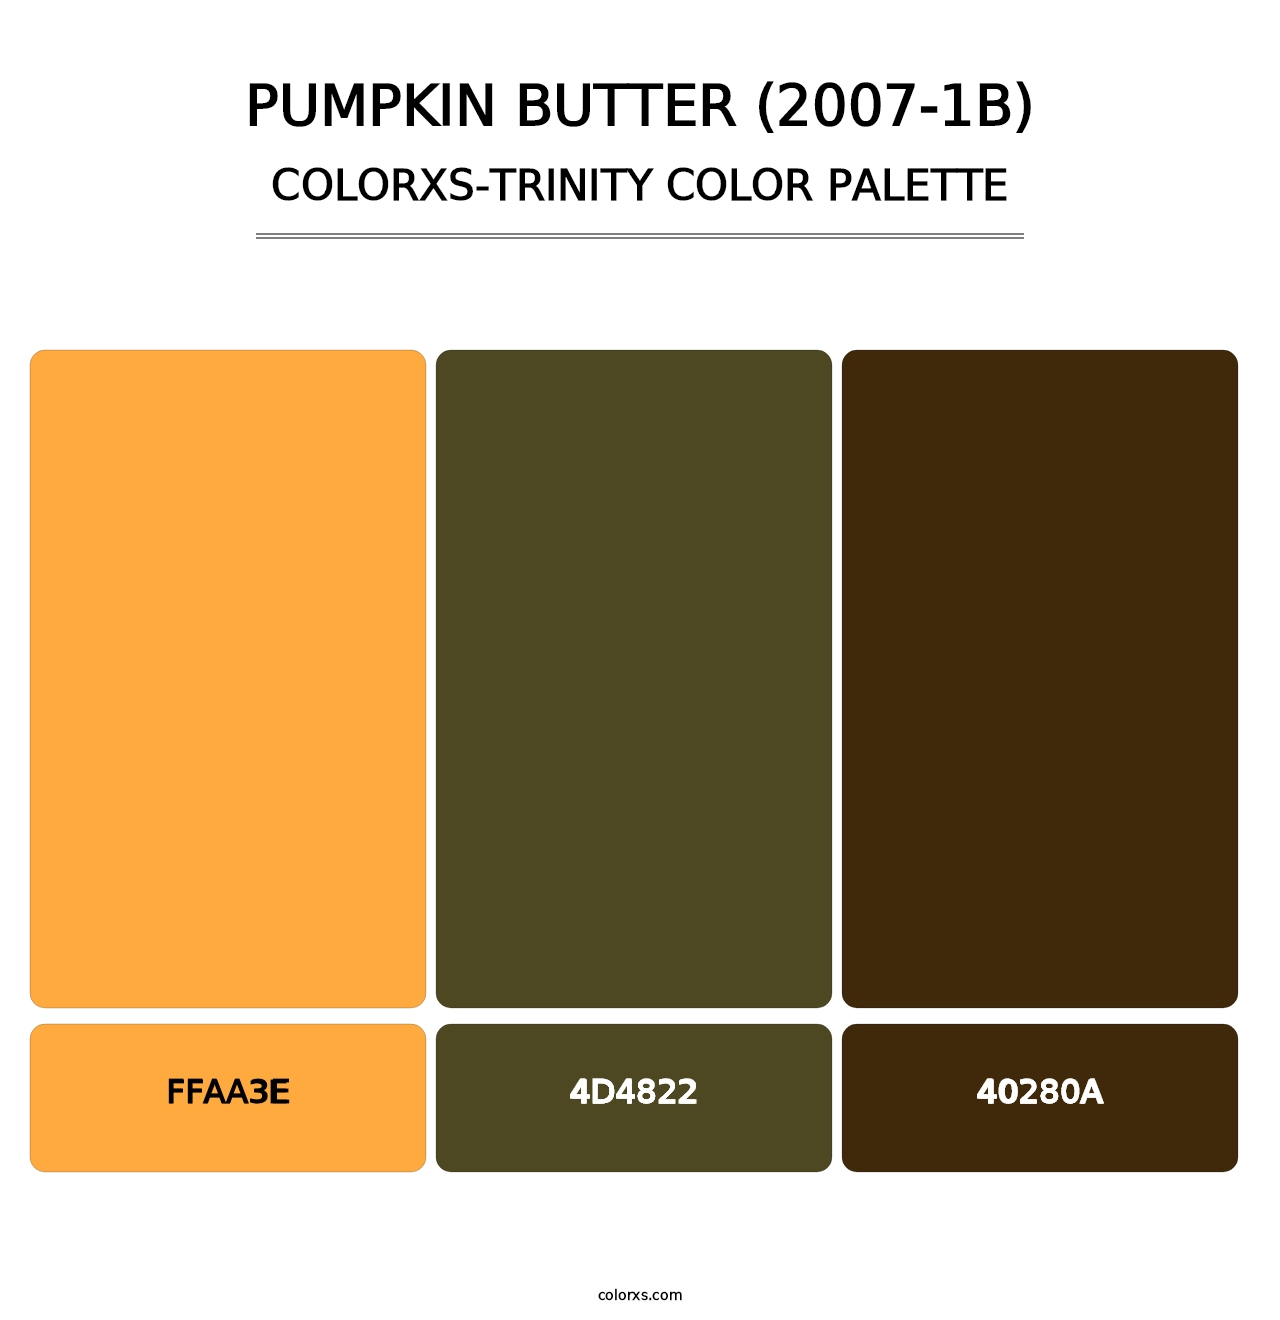 Pumpkin Butter (2007-1B) - Colorxs Trinity Palette